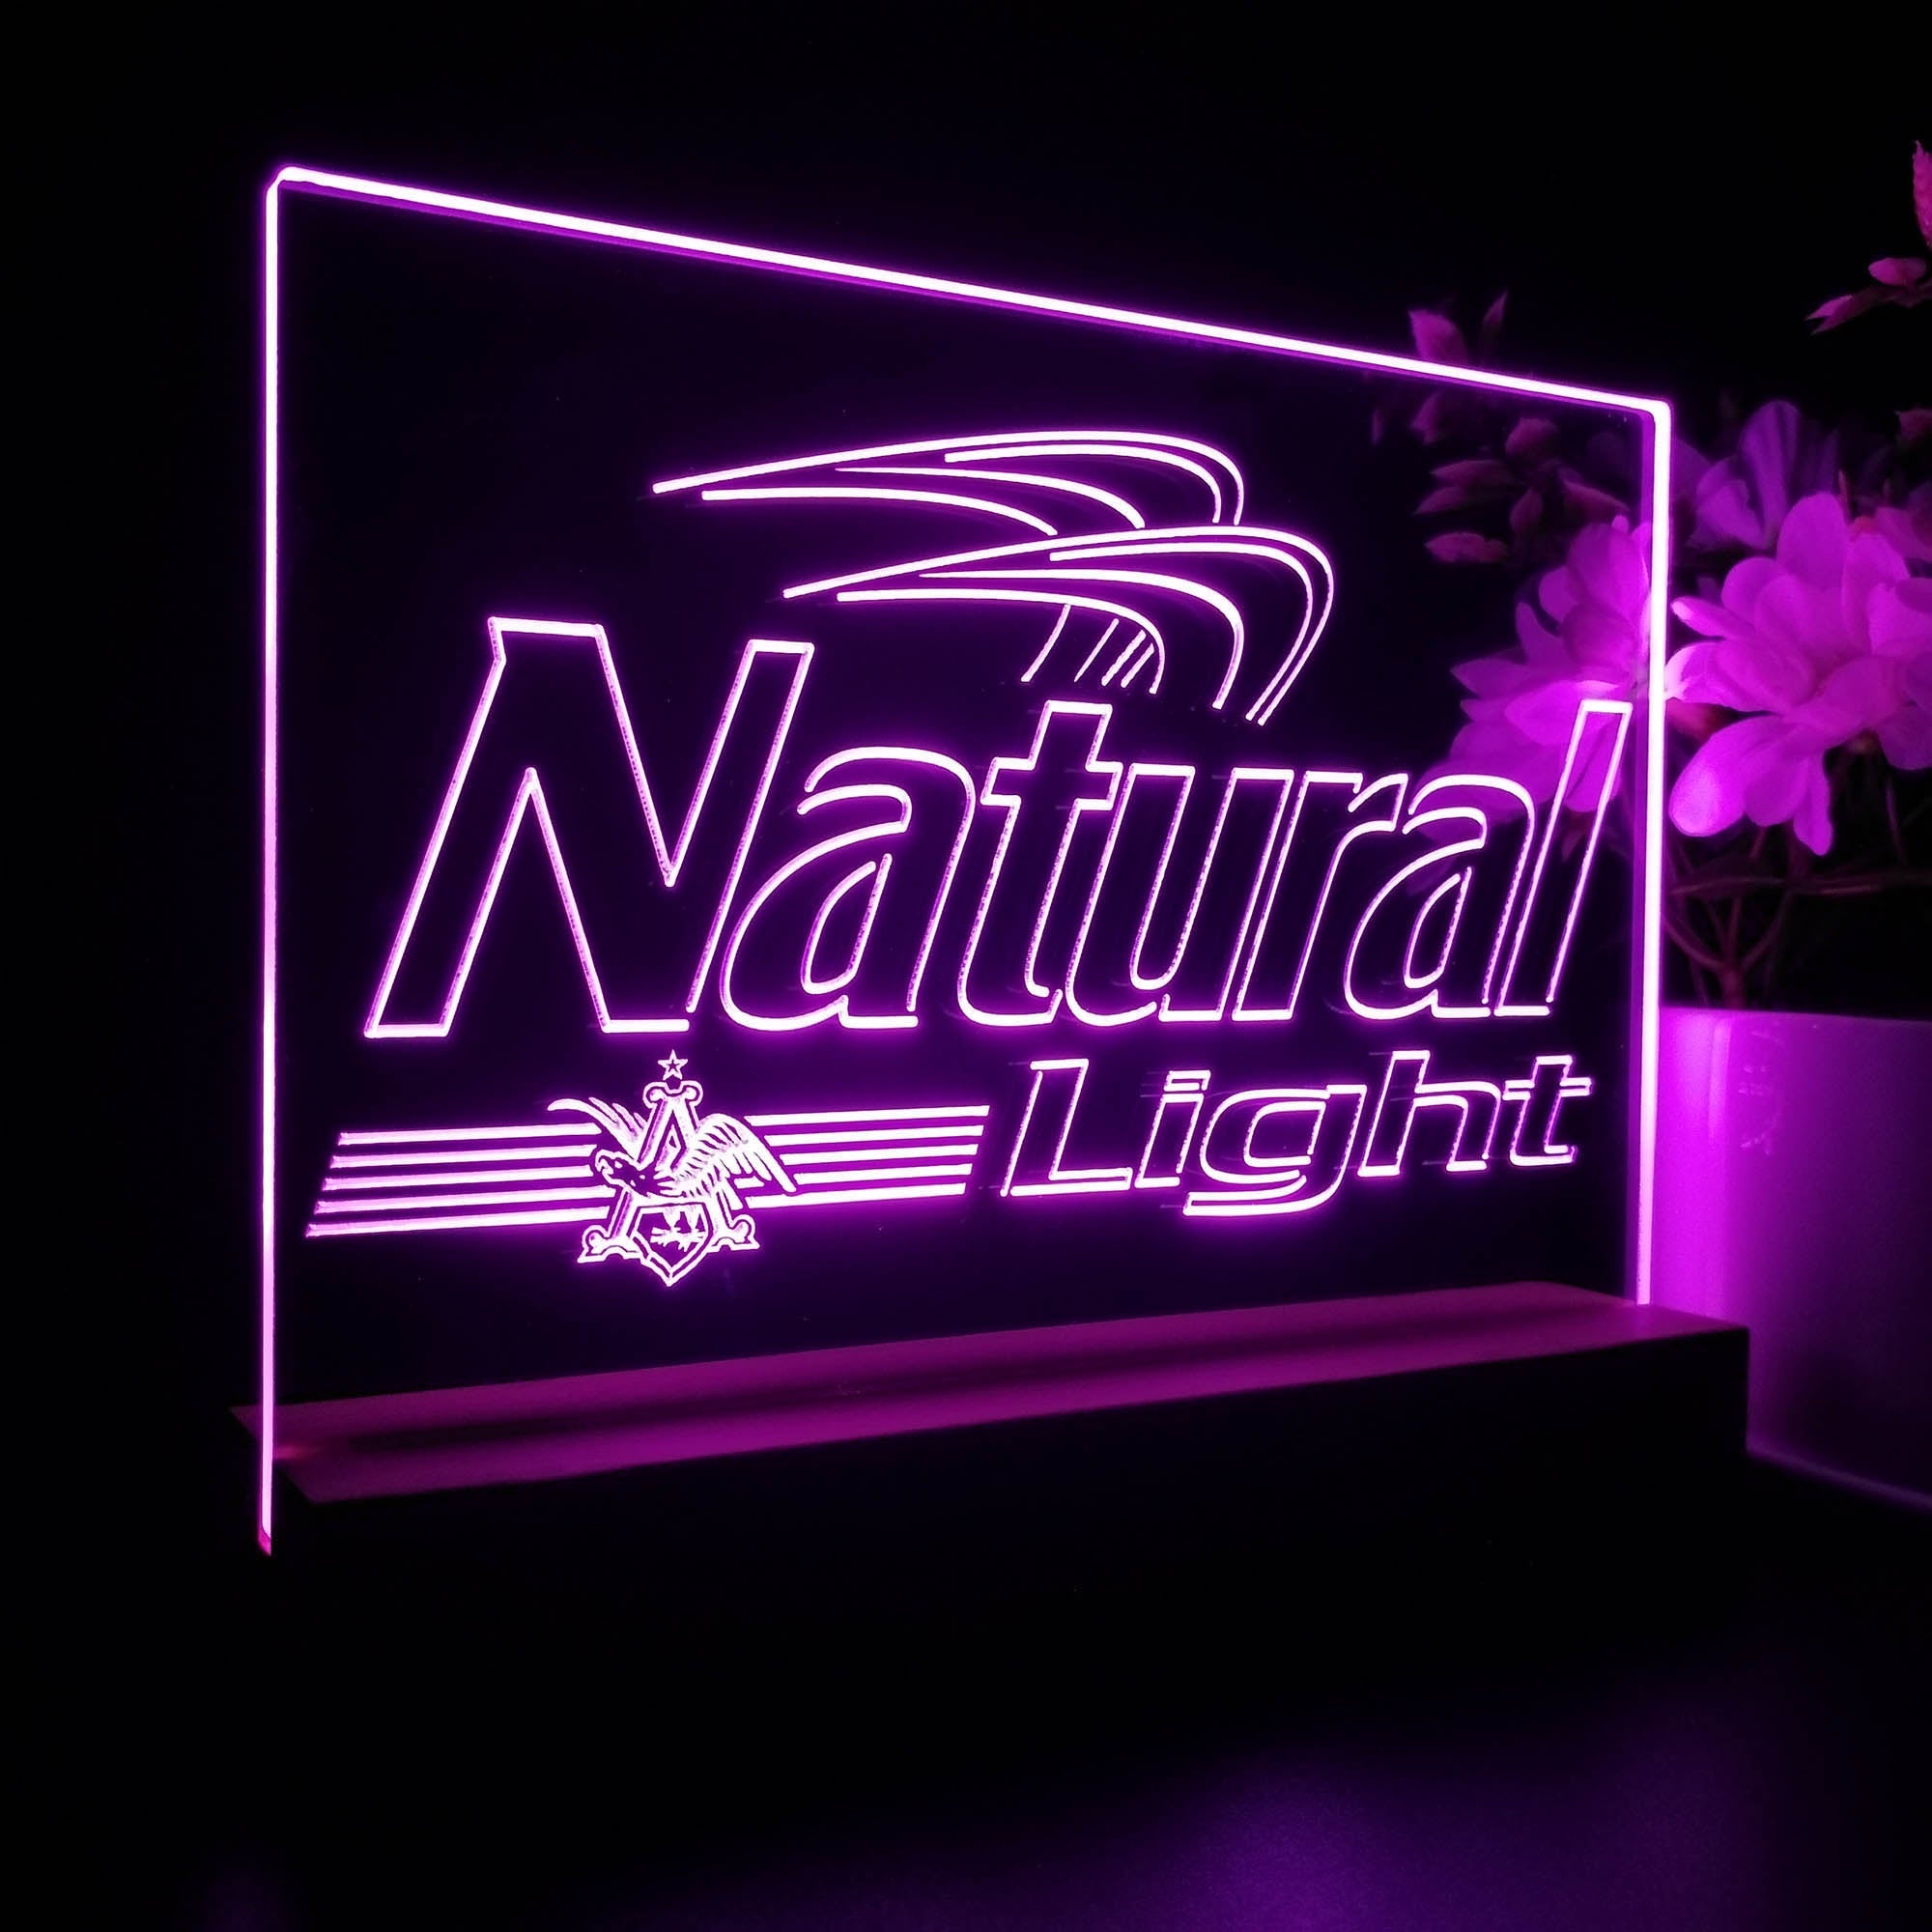 Natural Light Eagle Neon Sign Pub Bar Decor Lamp